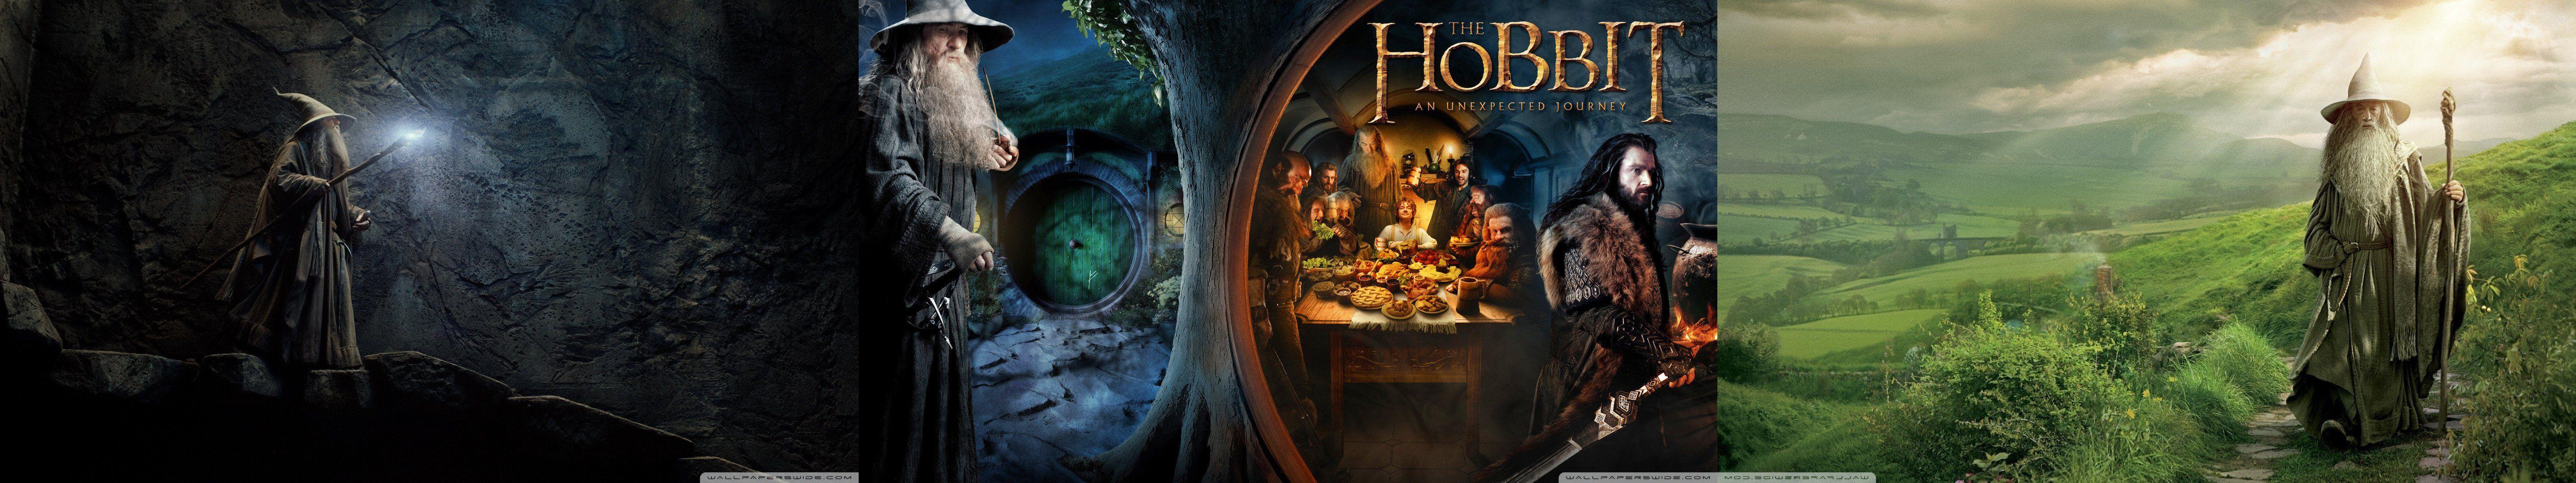 Lord Of The Rings Dual Screen Wallpaper - Singebloggg